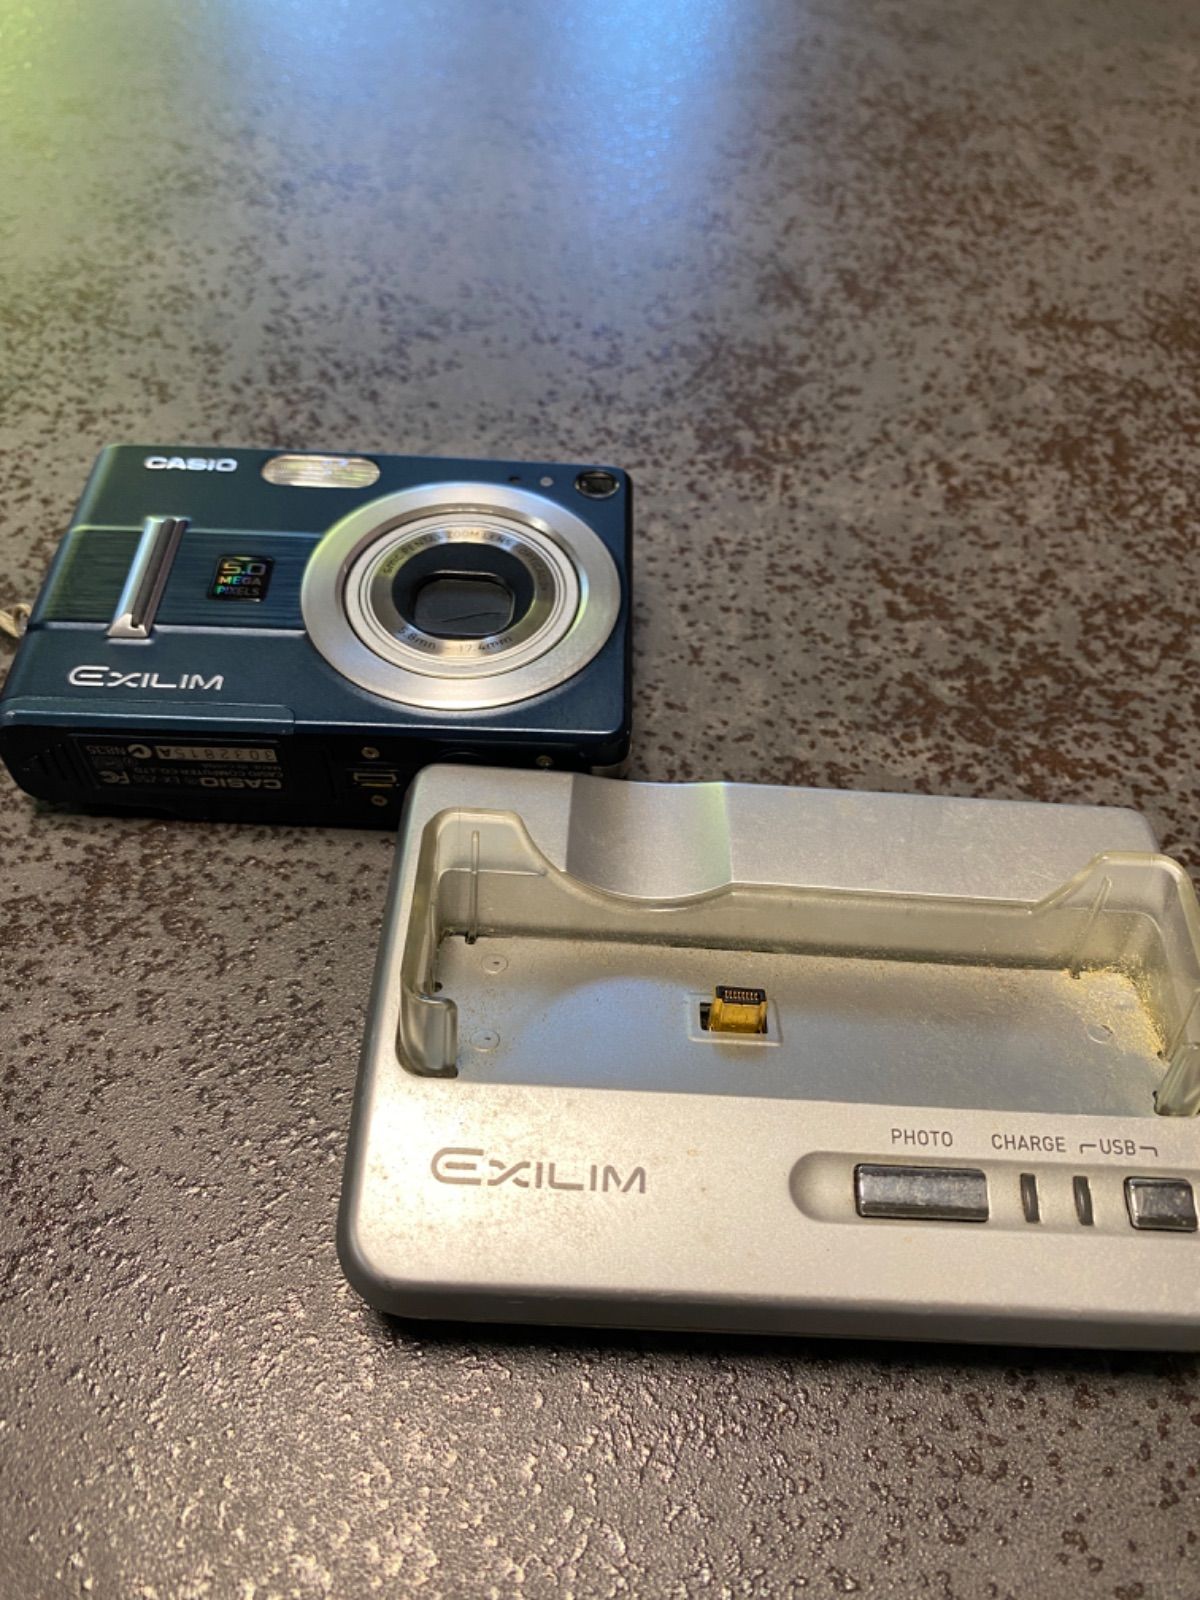 Casio カシオ Exilim EX-Z55 コンパクトデジタルカメラ - メルカリ